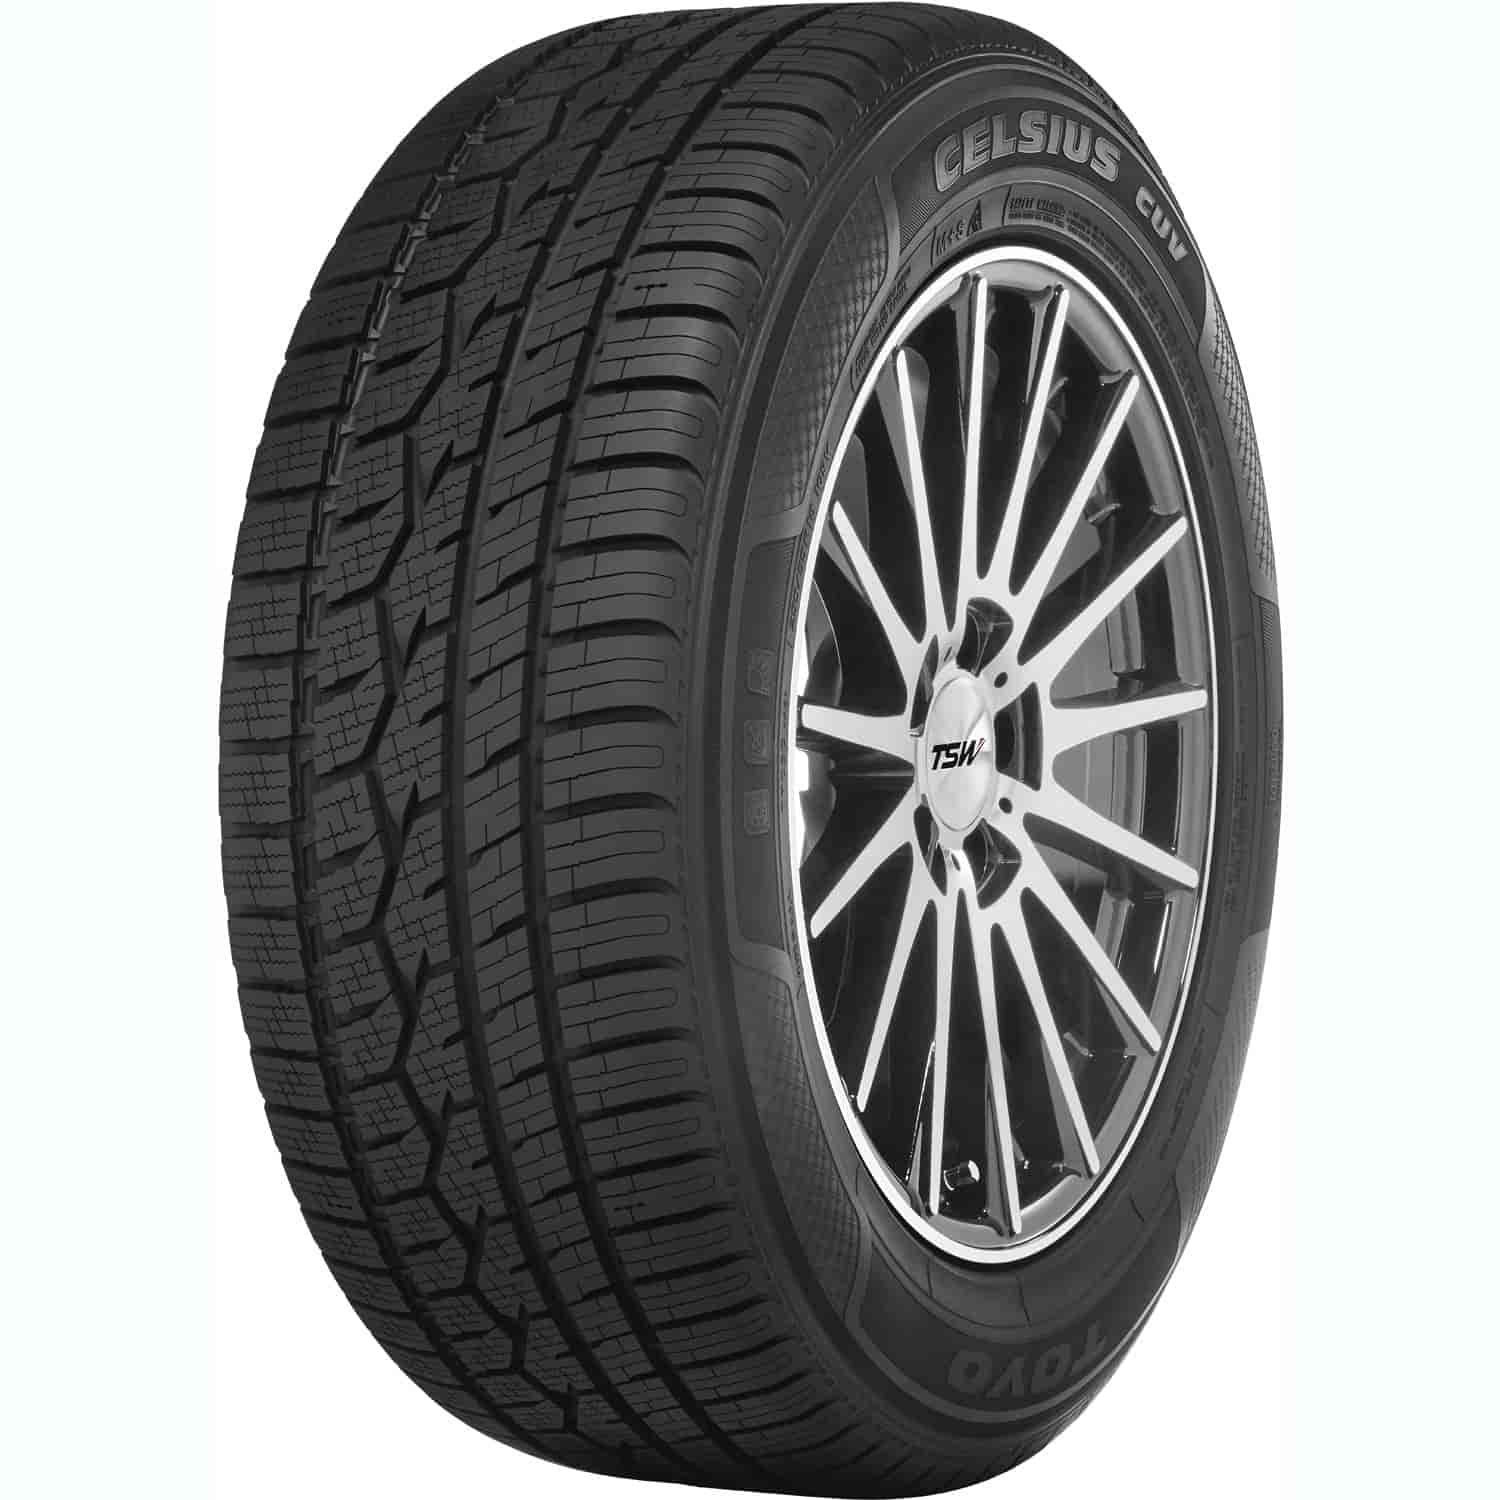 Celsius CUV Tire 235/70R16